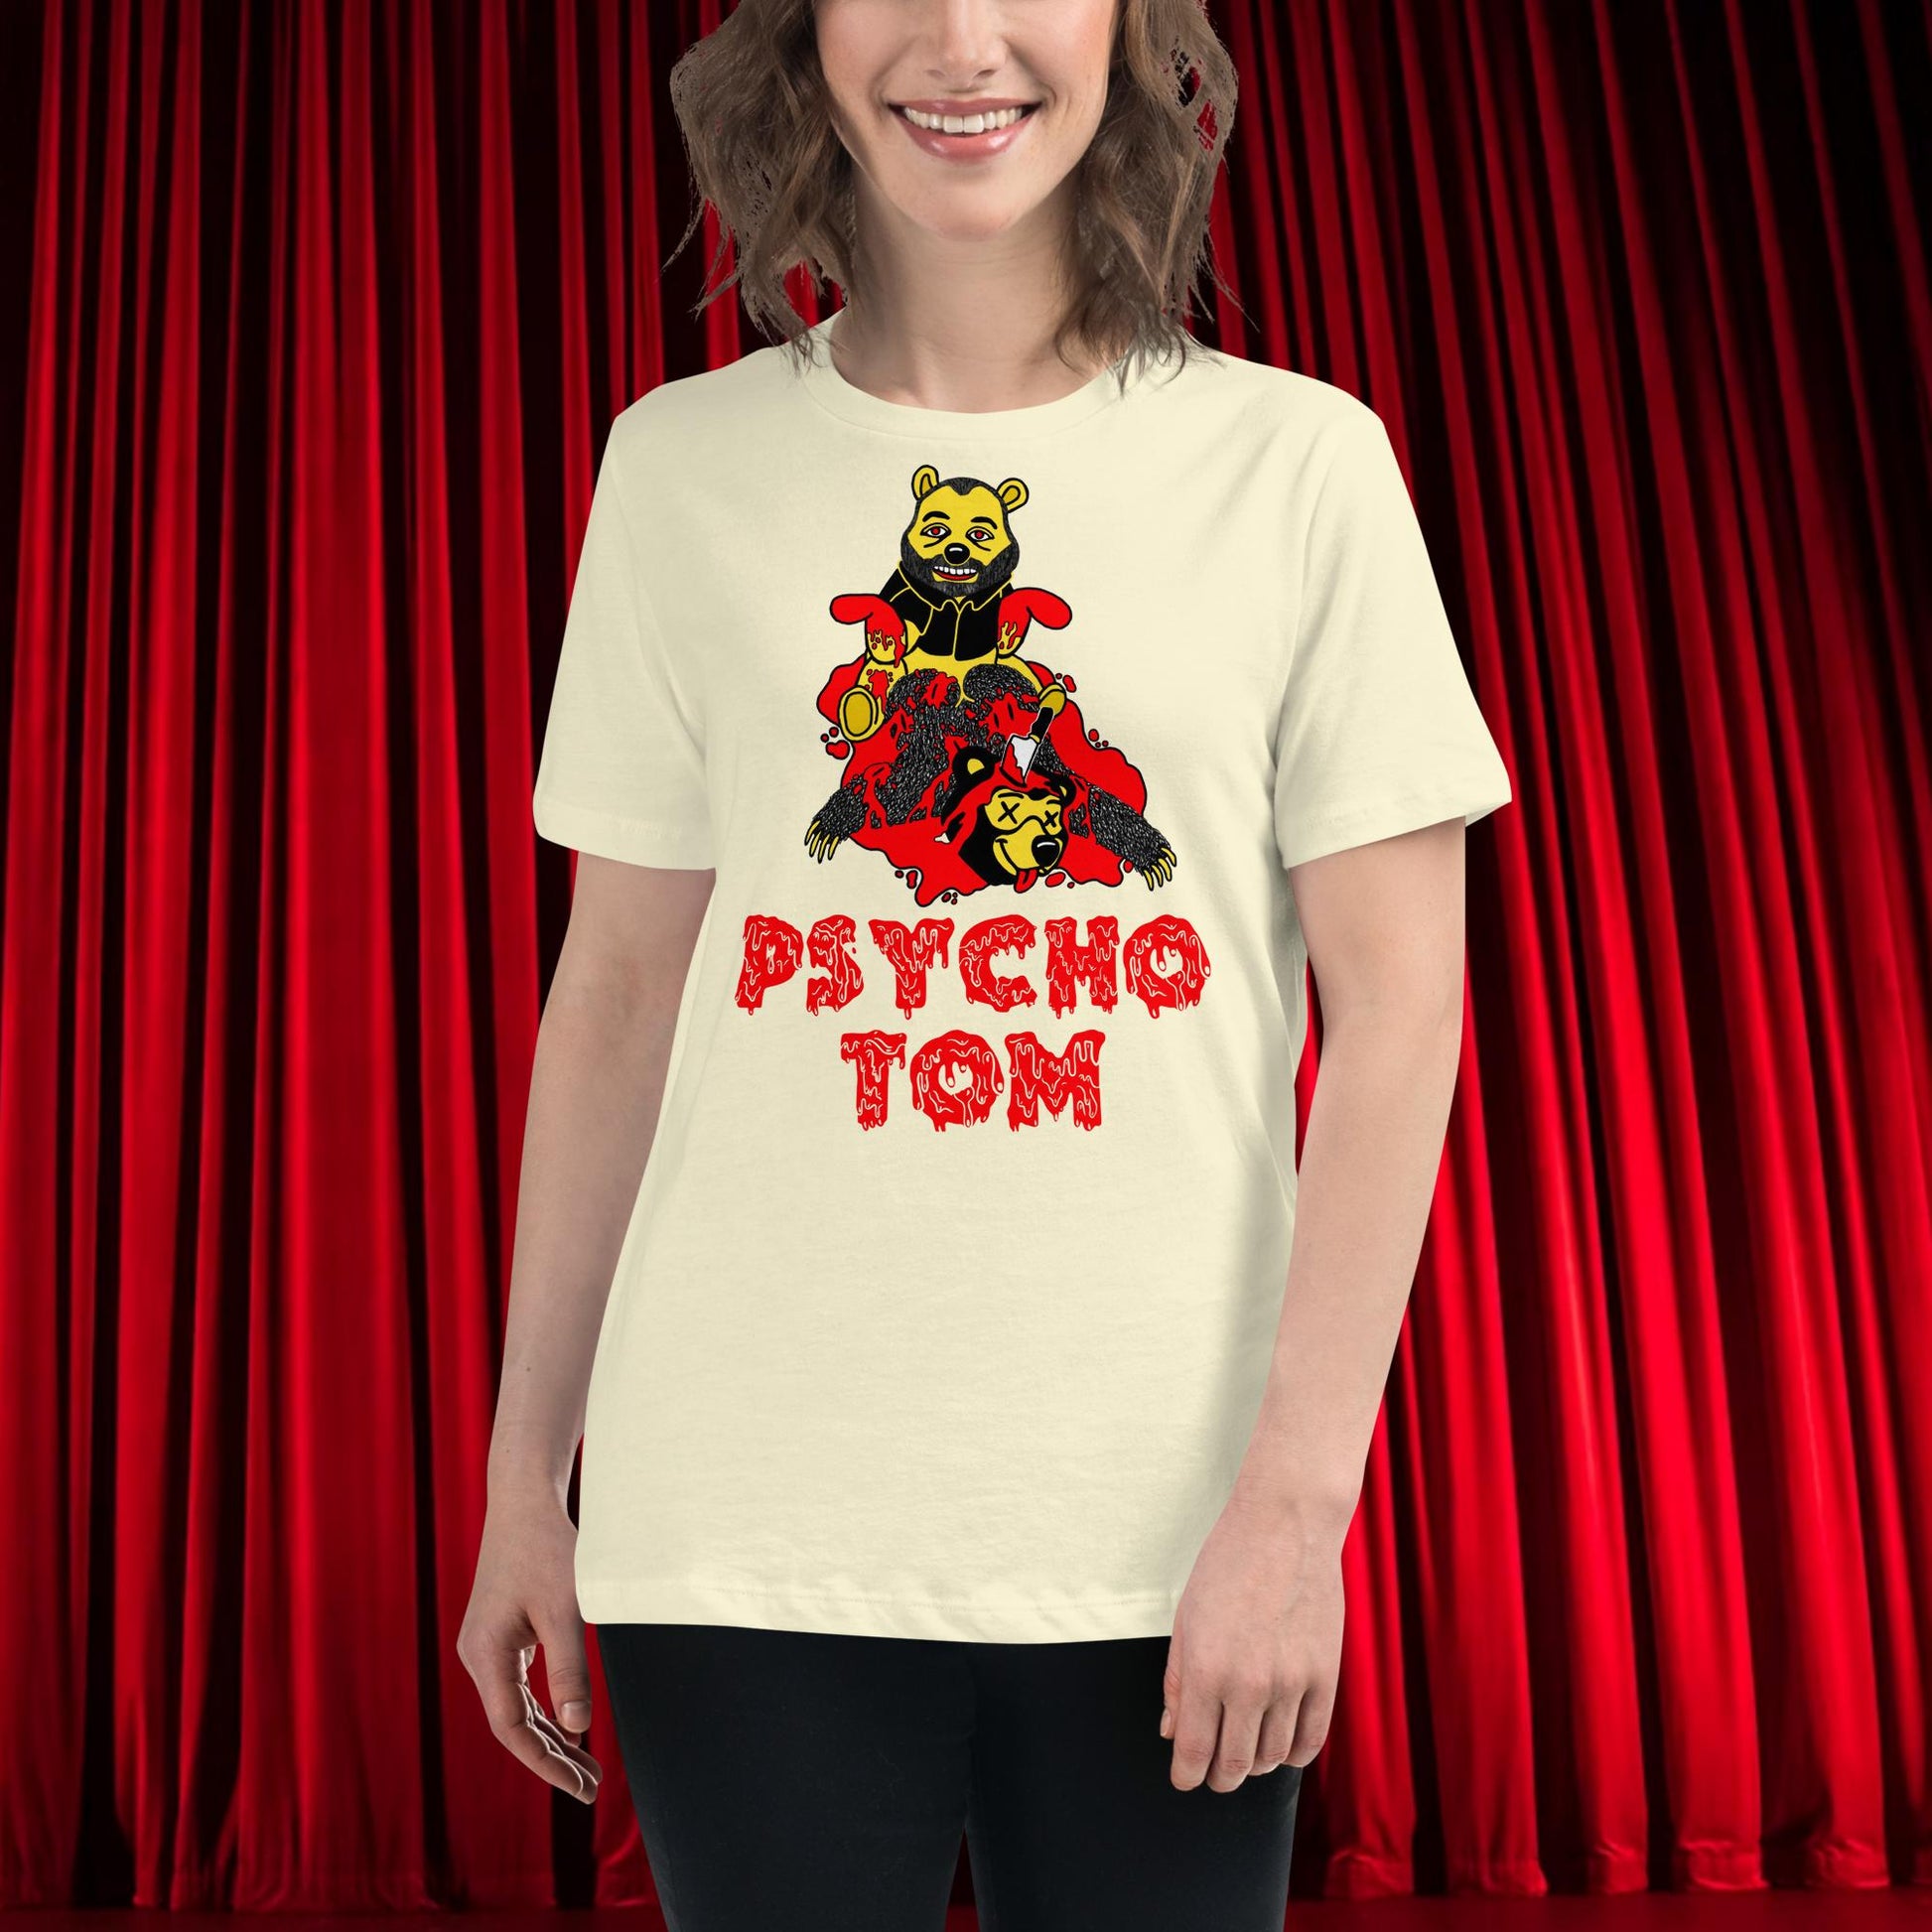 Psycho Tom Segura Women's Fit T-shirt, Tom Segura Shirt, Tom Segura Tee, 2b1c tshirt, 2 Bears 1 Cave merch, YMH merch Next Cult Brand 2 Bears 1 Cave, Podcasts, Stand-up Comedy, Tom Segura, YMH